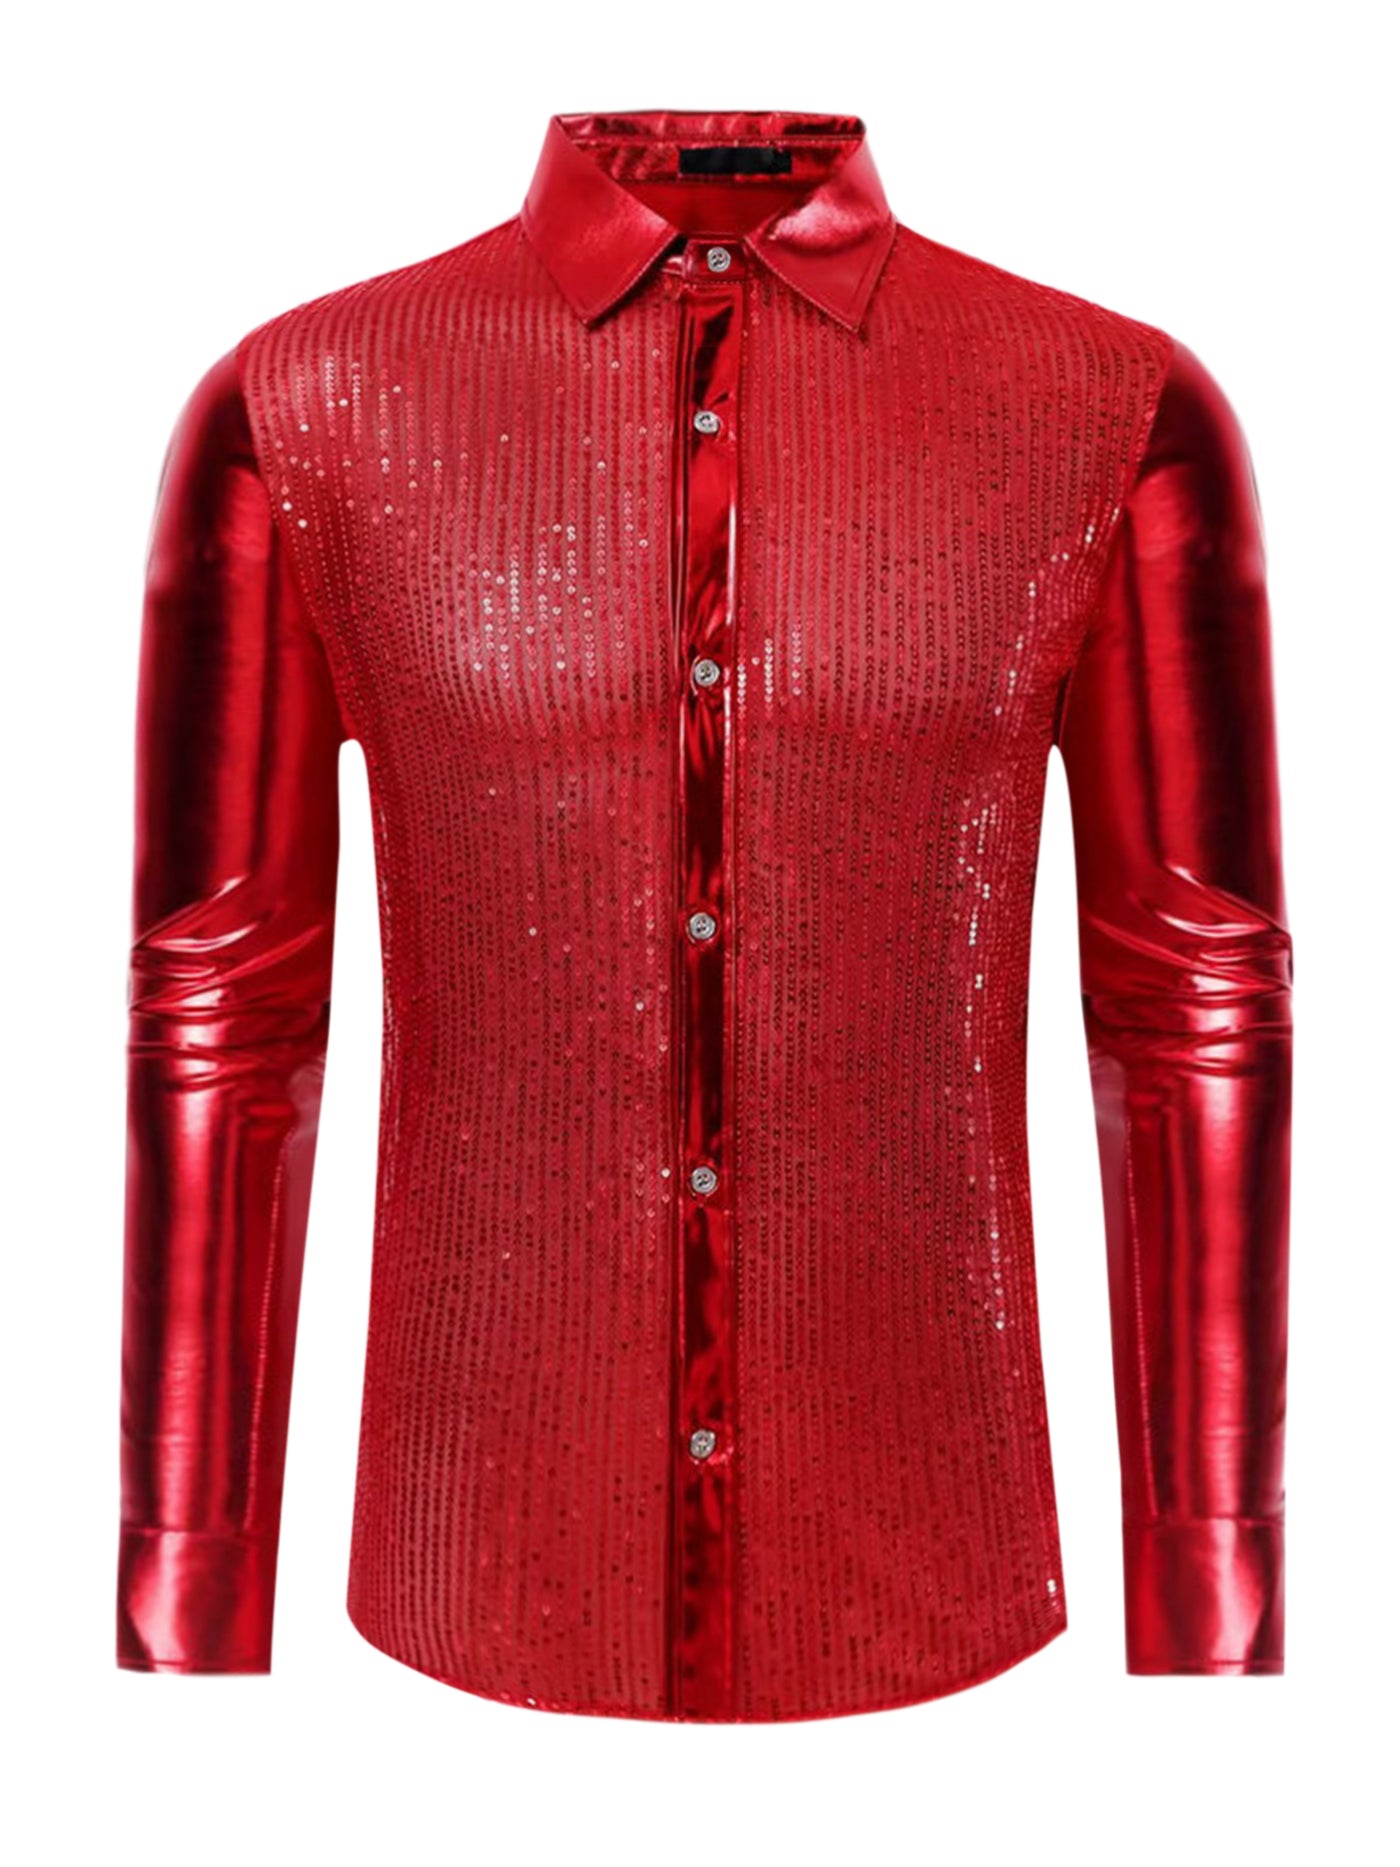 Bublédon Shiny Sequins Shirt for Men's Disco Party Long Sleeves Button Down Metallic Shirts